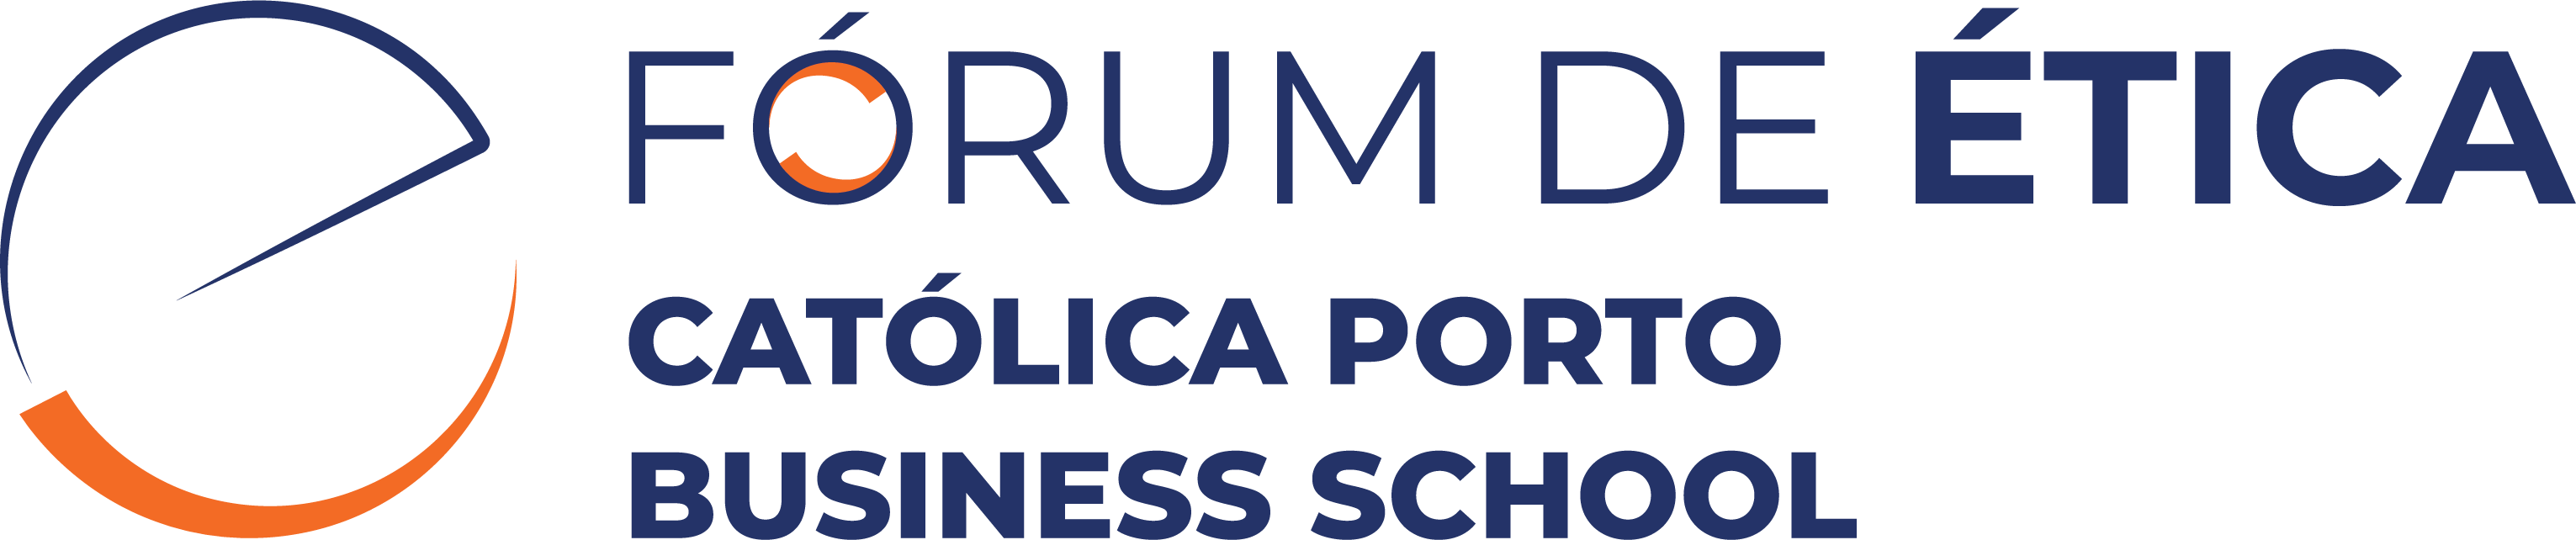 https://catolicabs.porto.ucp.pt/pt-pt/about/ethics-responsibility-sustainability/ethics-forum/apresentacao